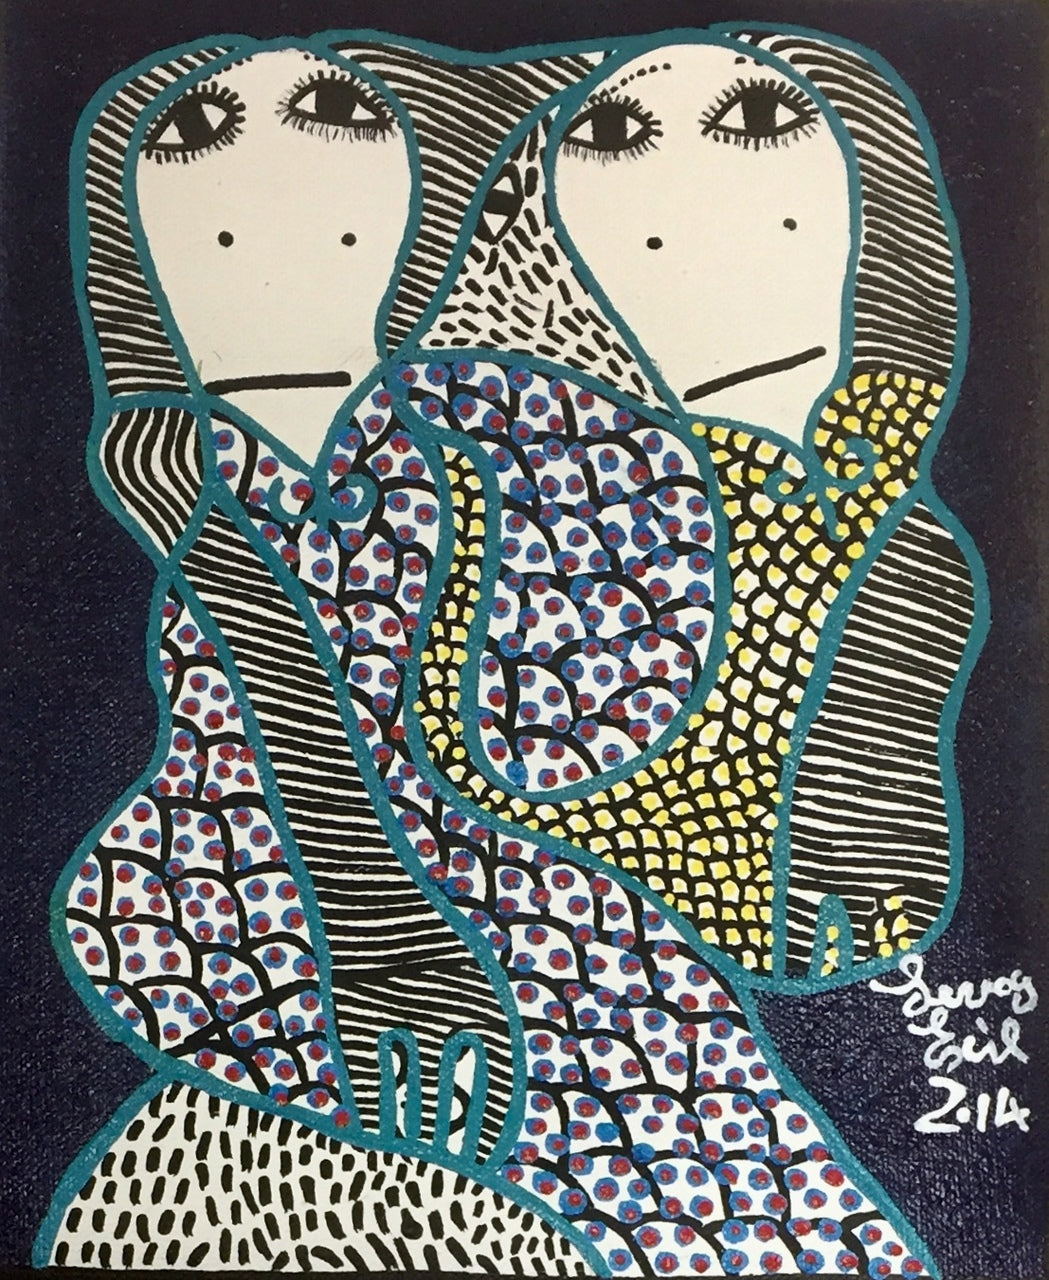 Levoy Exil 10"x8" Two Fondling Spirits 2014 Acrylic on Canvas #2MFN